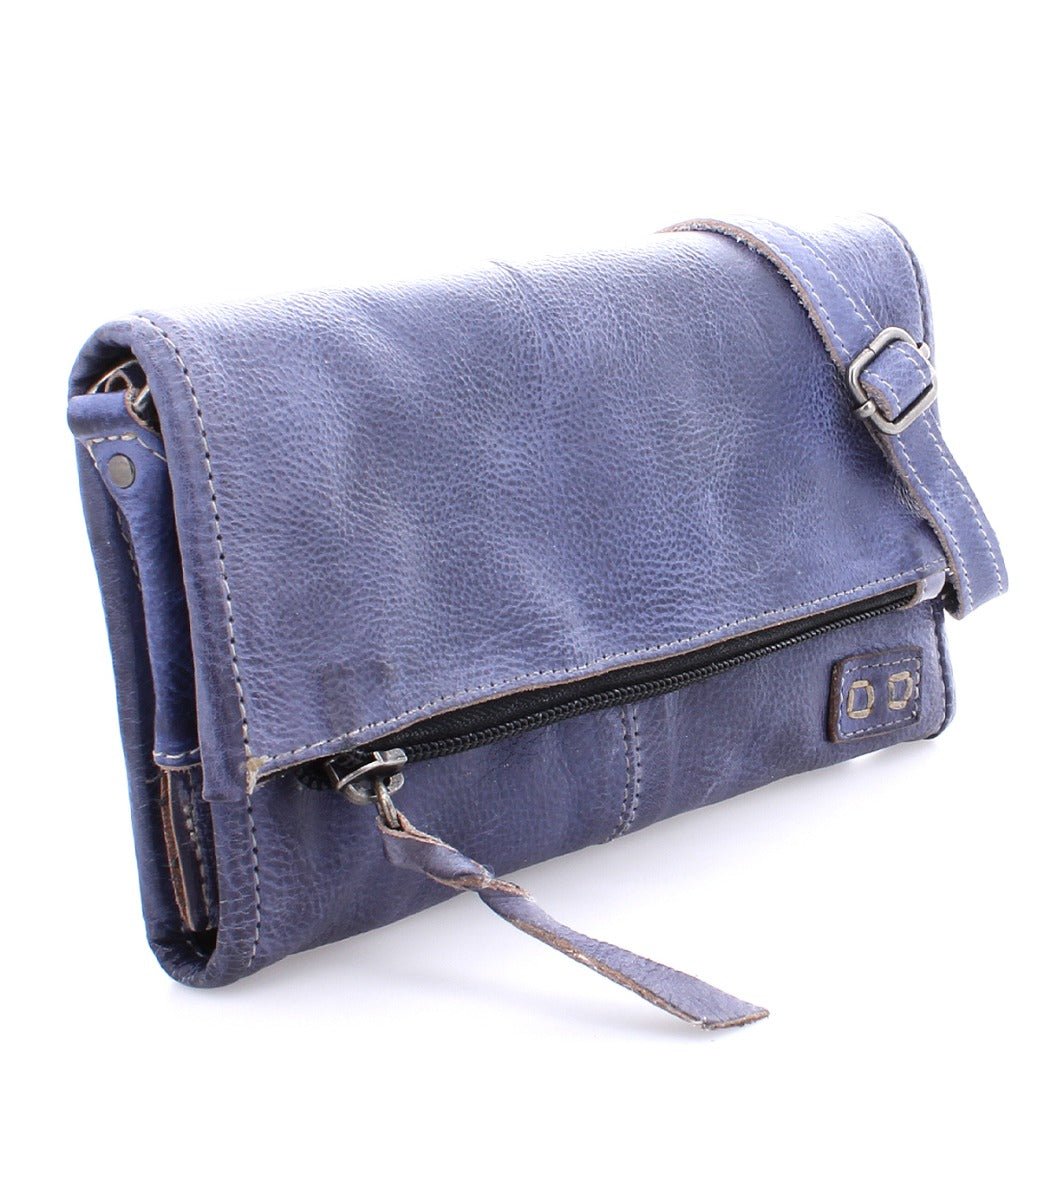 An Amina by Bed Stu blue leather clutch bag with a zipper.